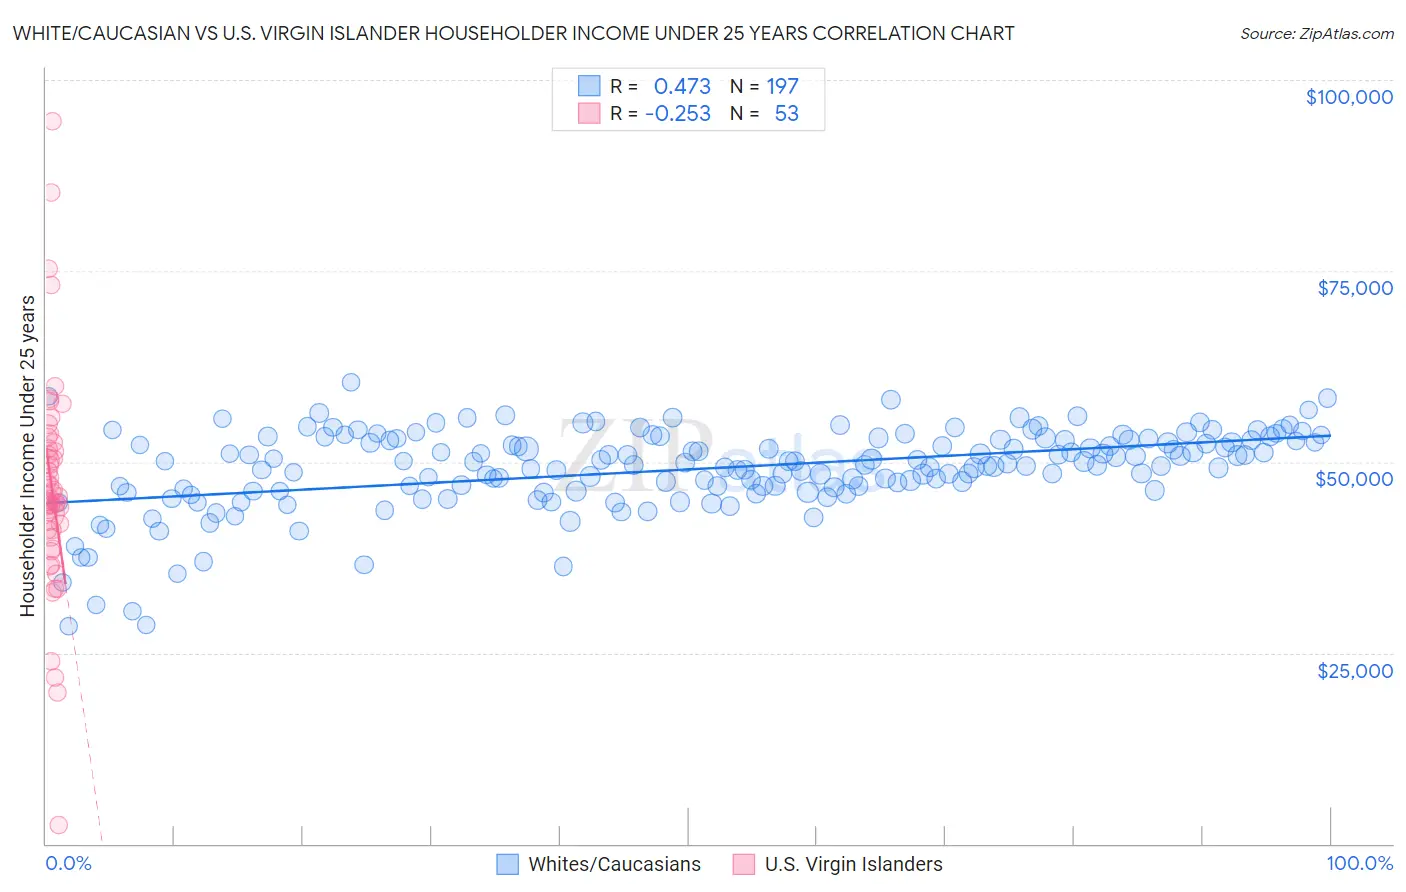 White/Caucasian vs U.S. Virgin Islander Householder Income Under 25 years